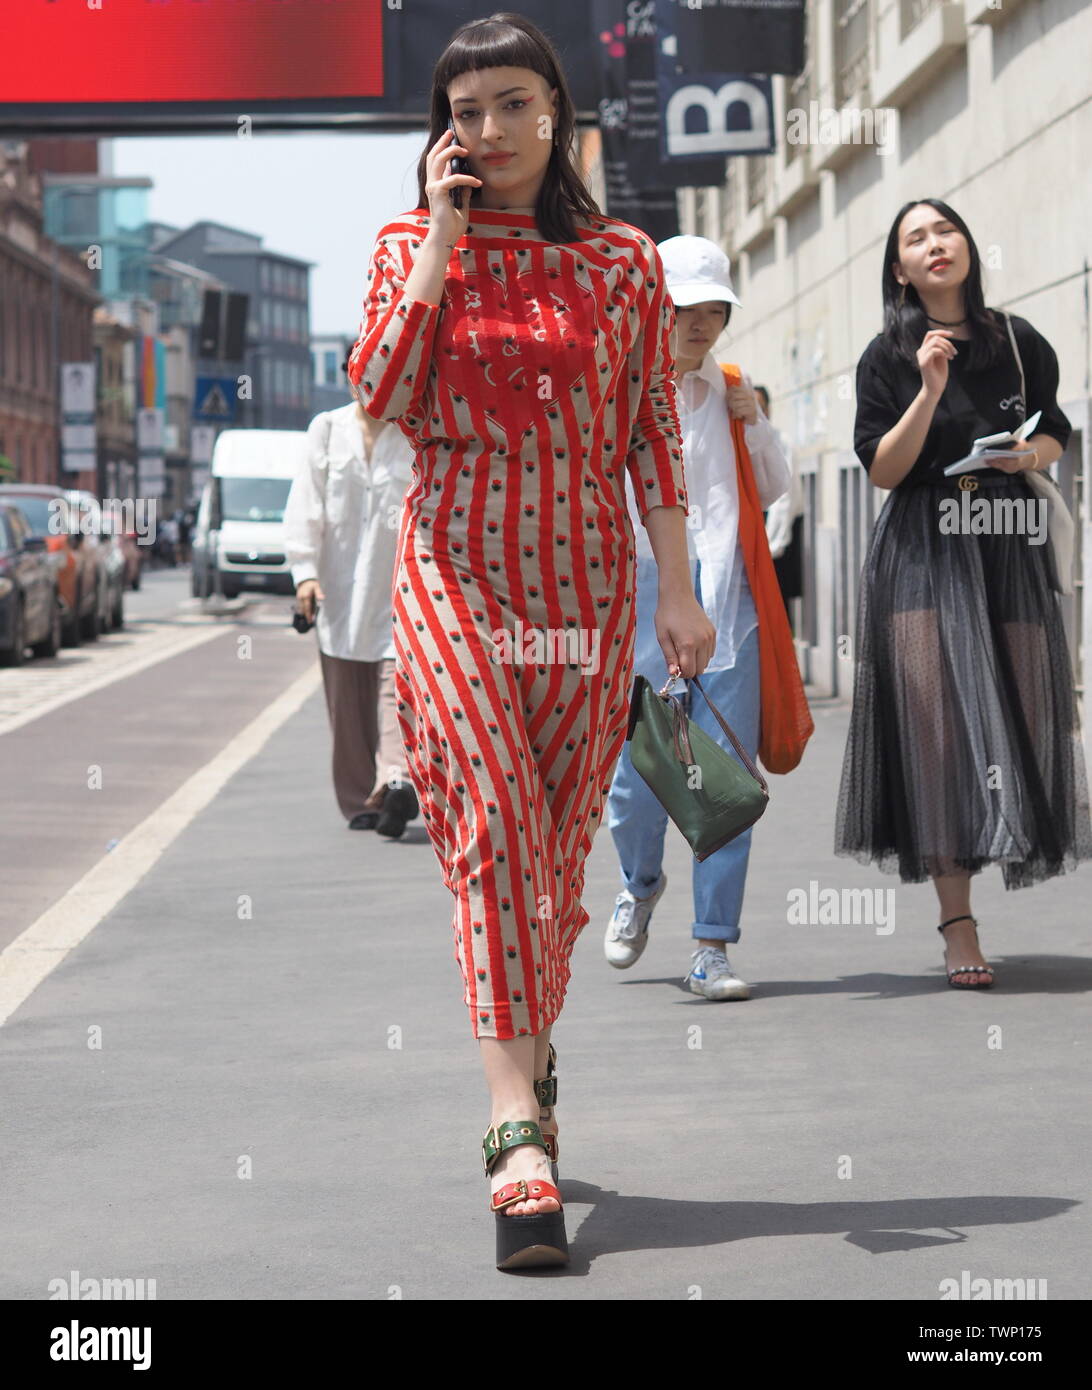 MILANO, Italy: 15 June 2019: Marta Festa street outfit after Magliano fashion show Milano Fashion Week man Stock Photo -